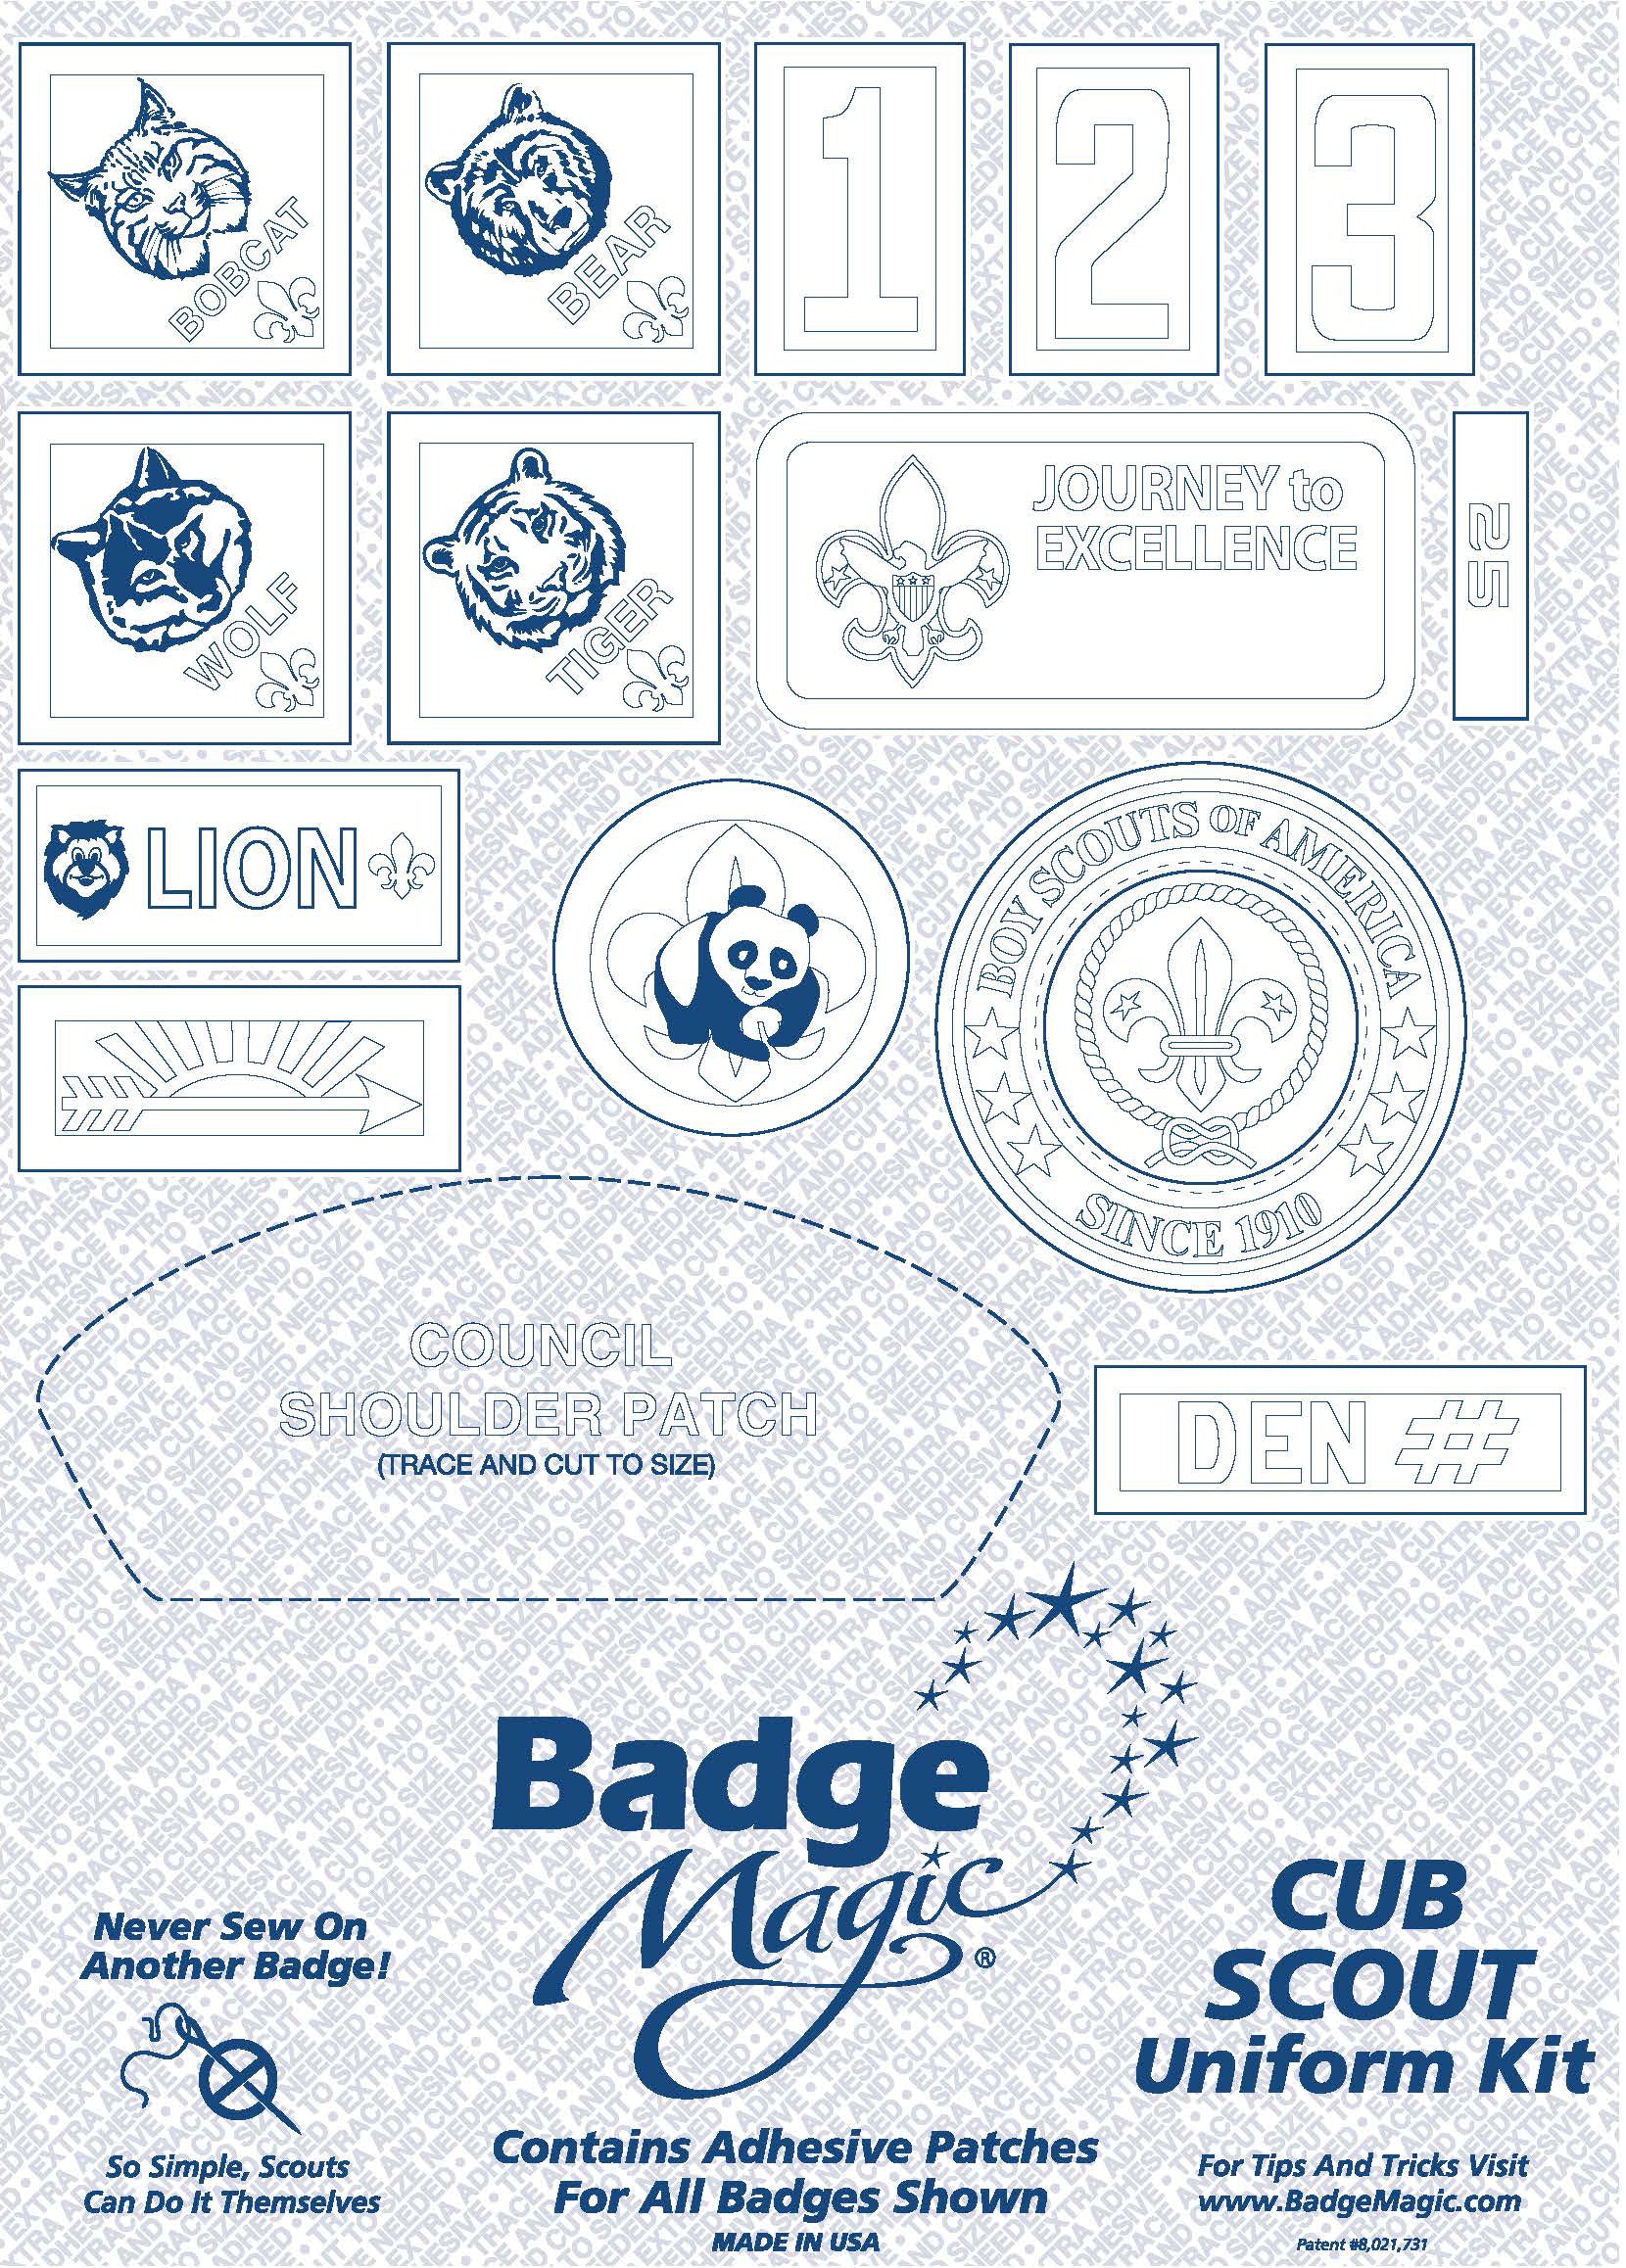 Badge Magic AHG Cut to Fit Kit